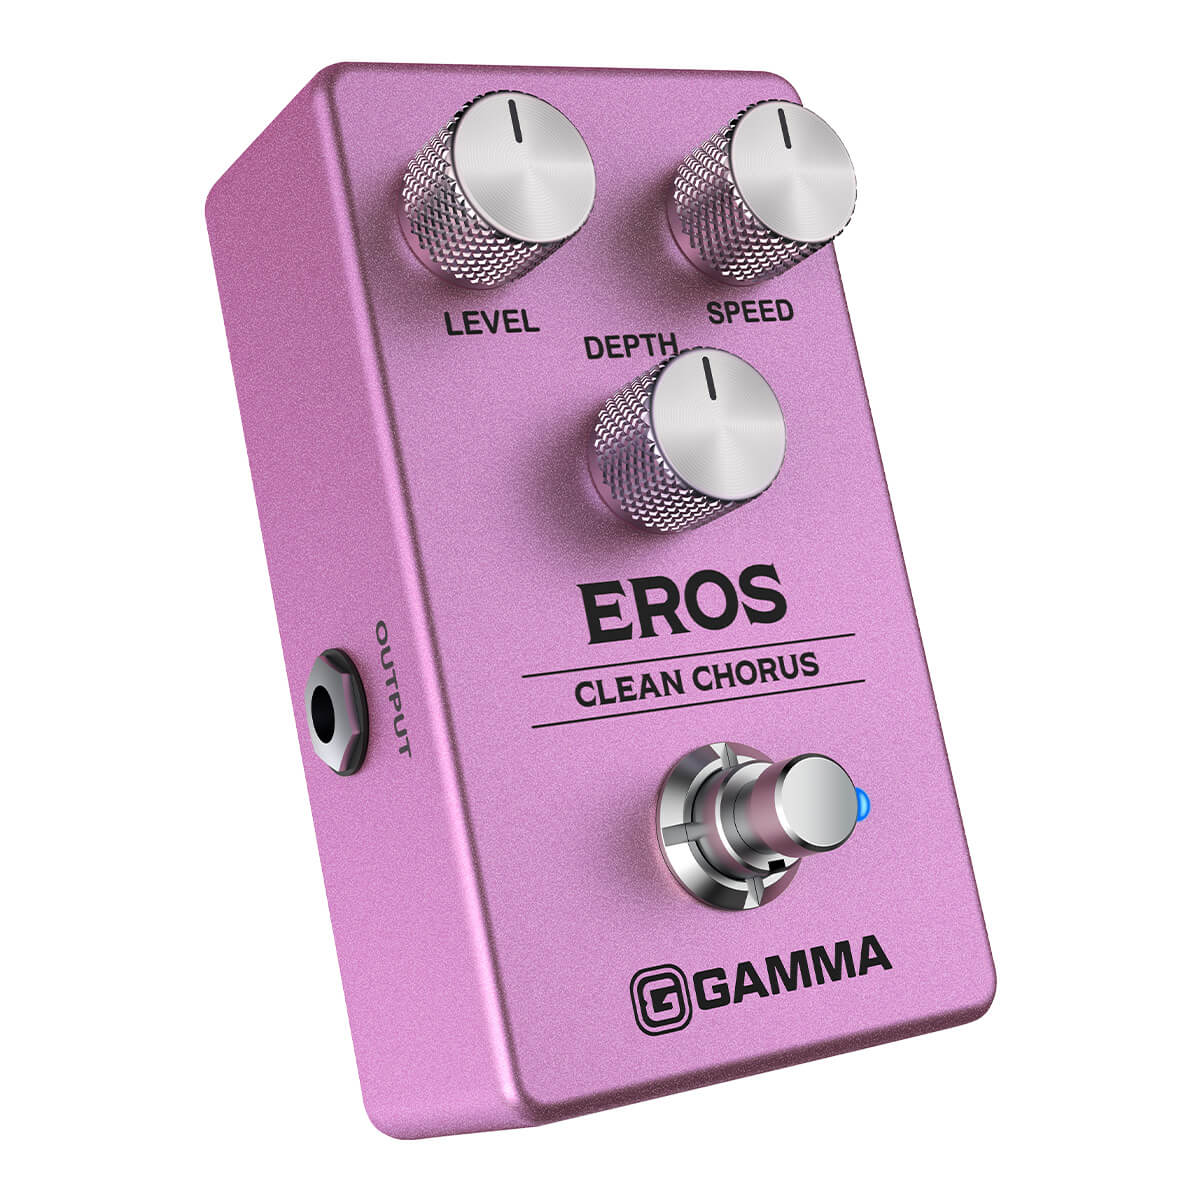 Gamma Eros clean chorus pedal angled right.